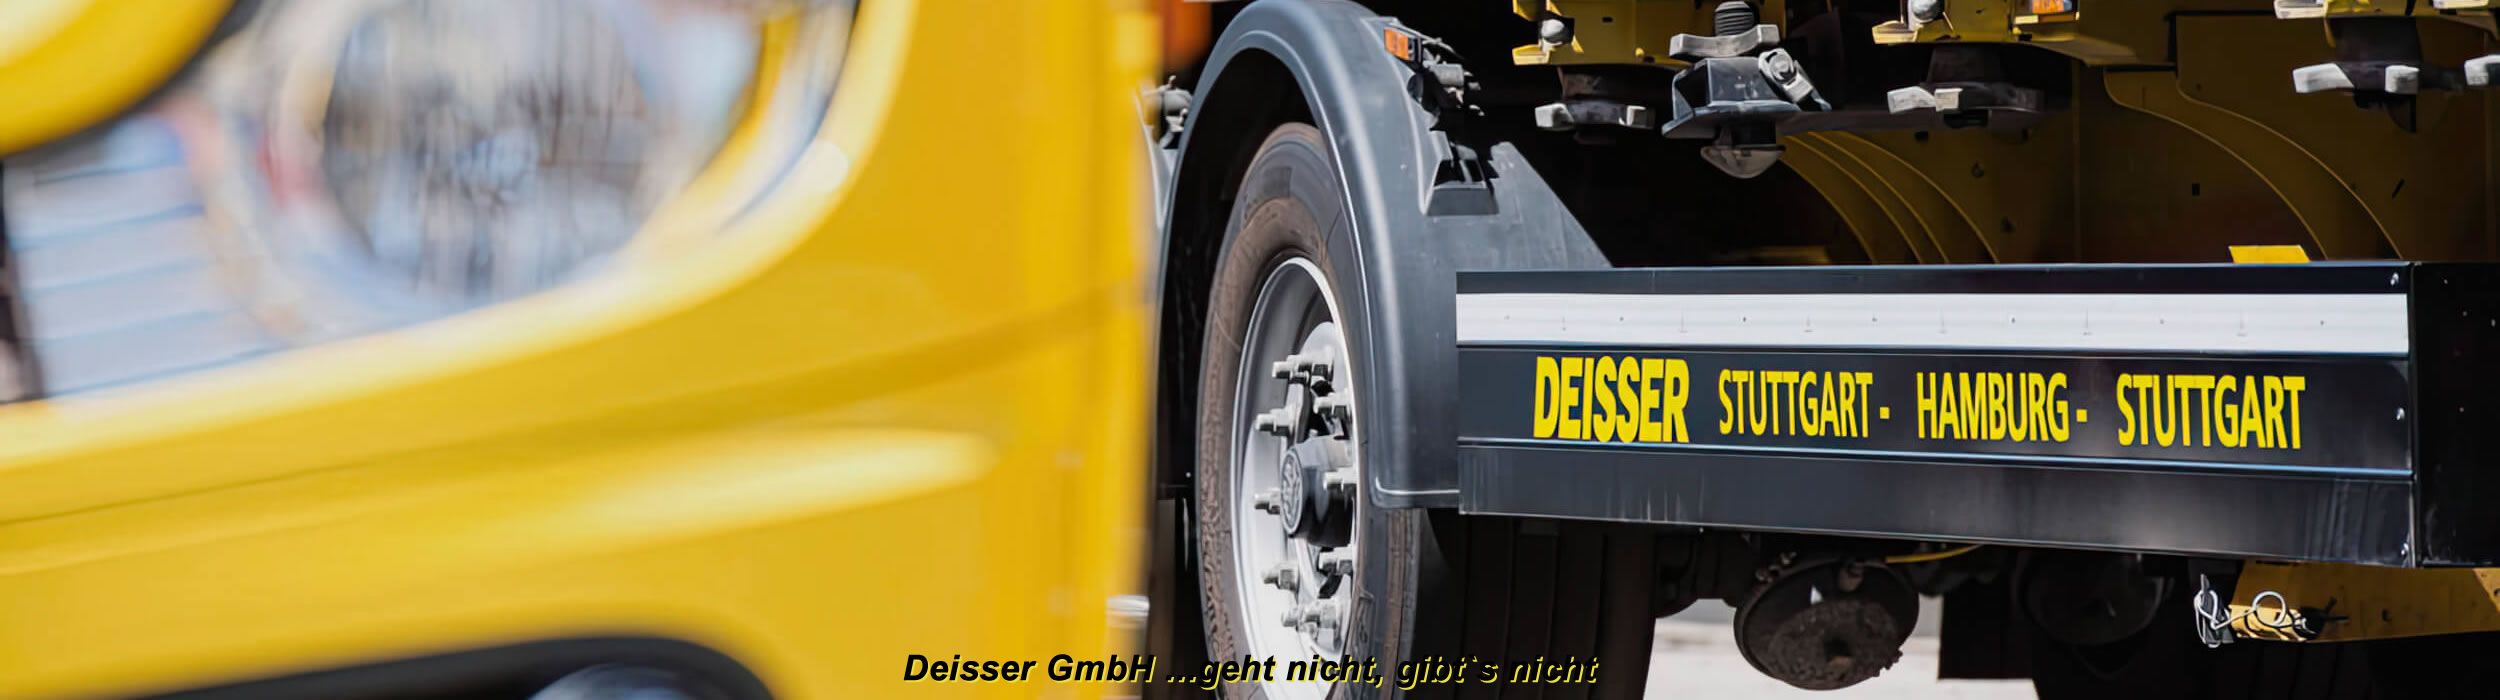 Deisser GmbH / Transportlogistik Seecontainer / Transportlogistik